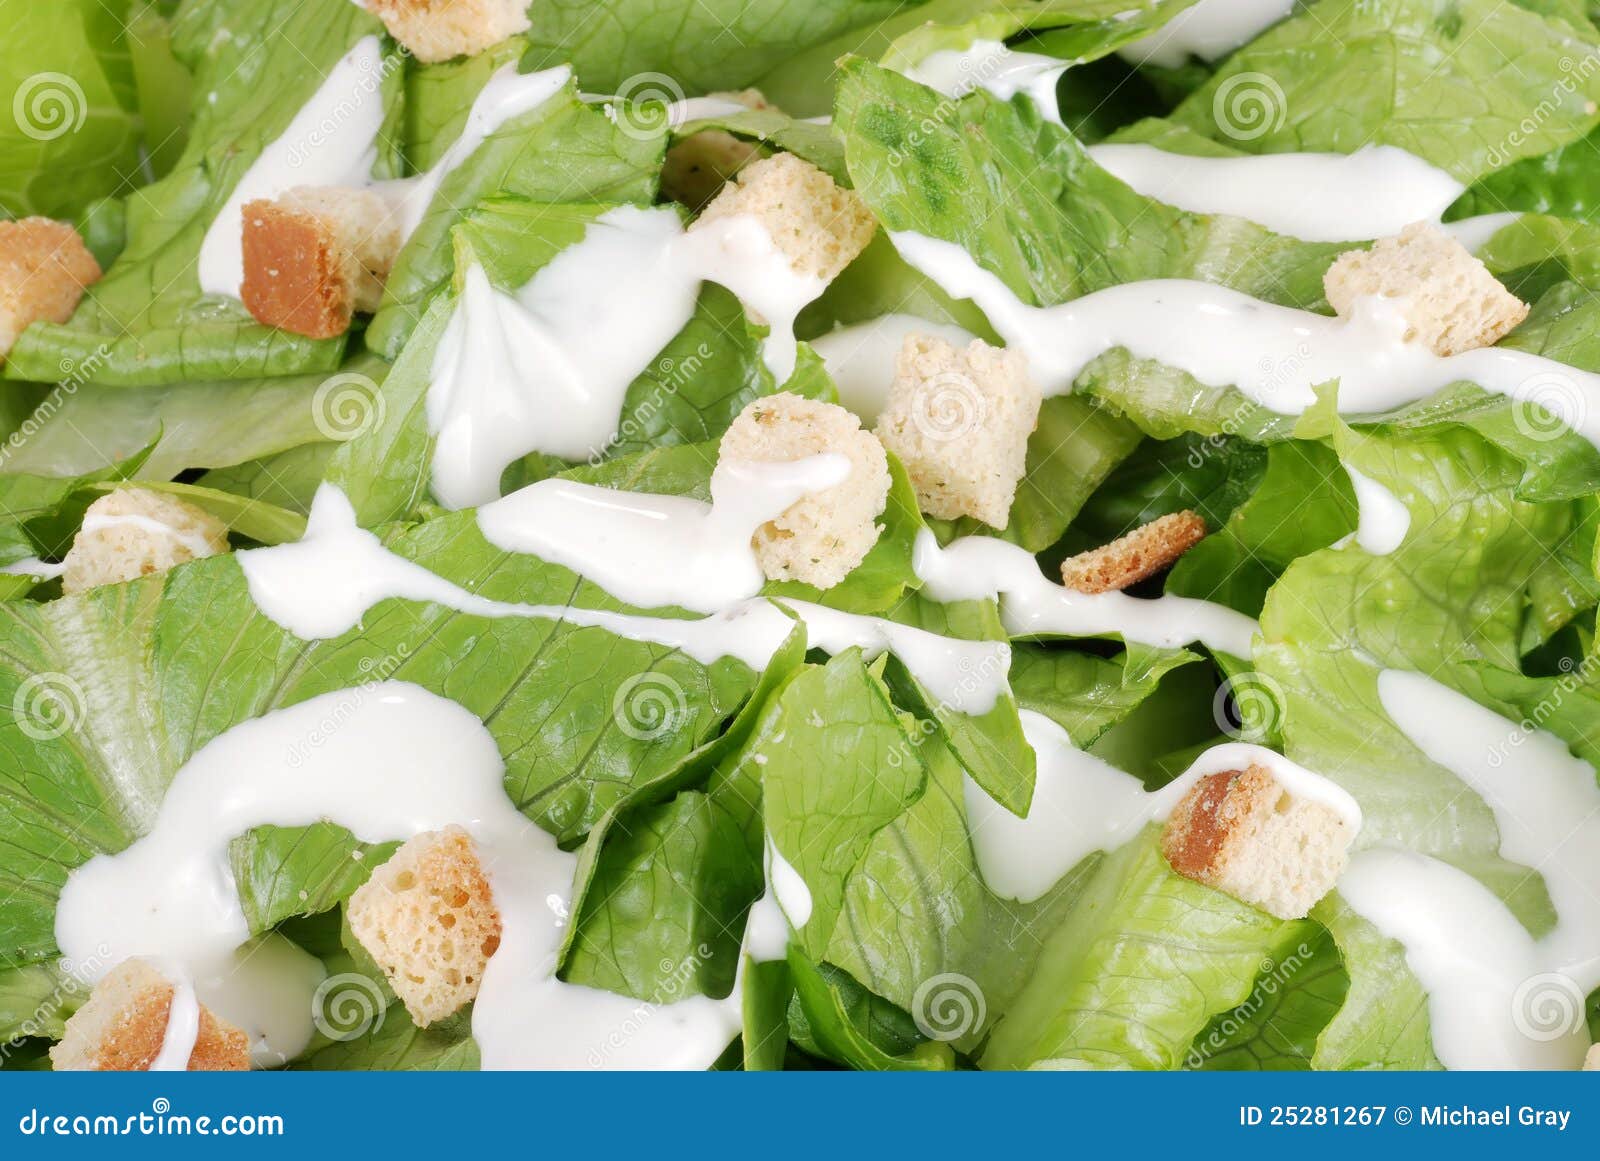 macro cesar salad